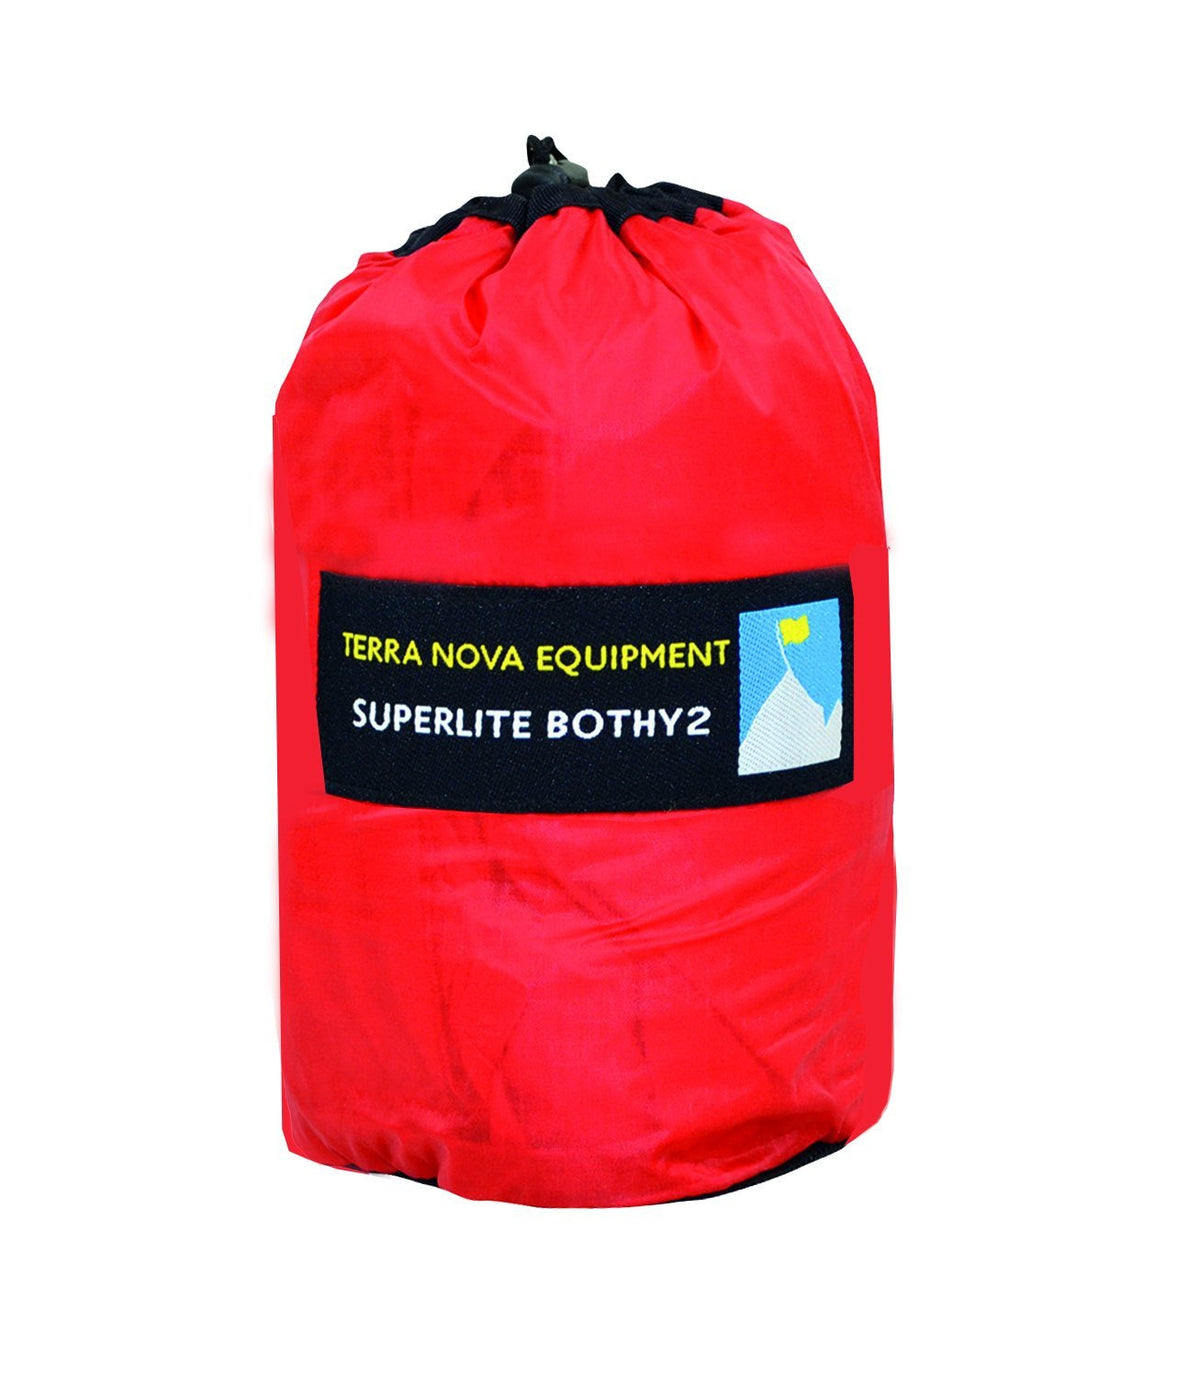 Terra Nova Superlite Bothy 2, an emergency survival shelter in a red stuff sack